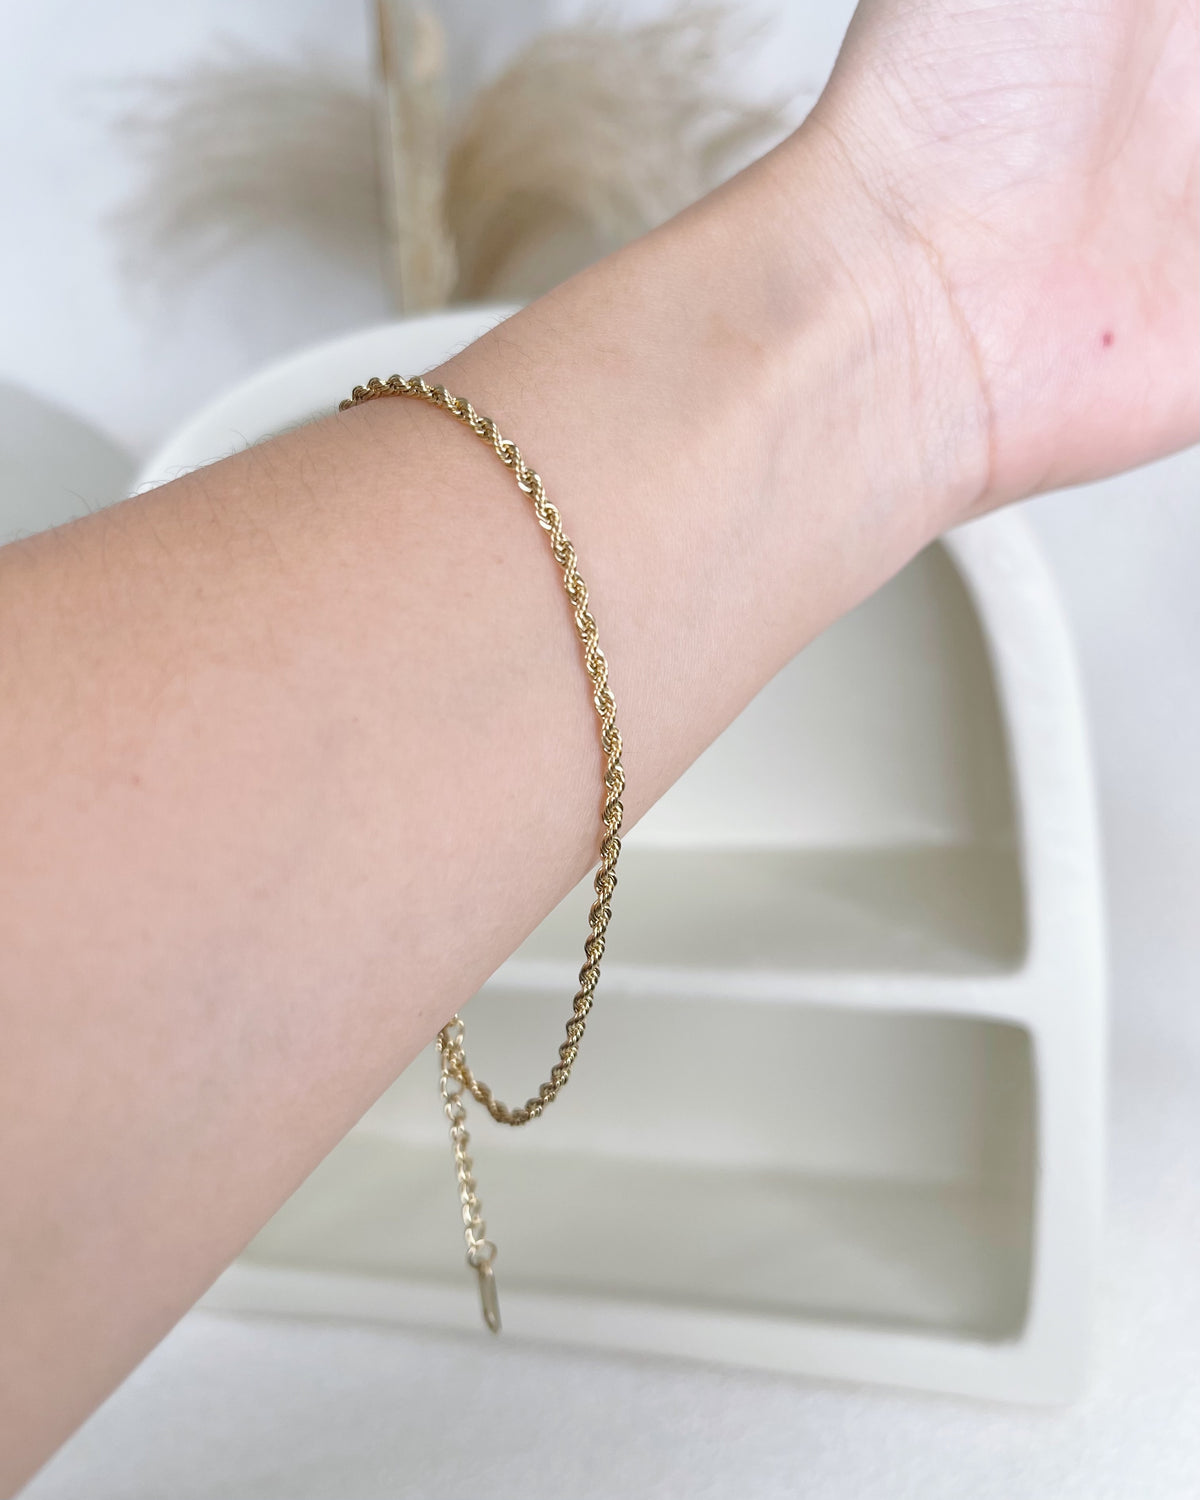 Alondra Gold Rope Chain Bracelet / Anklet